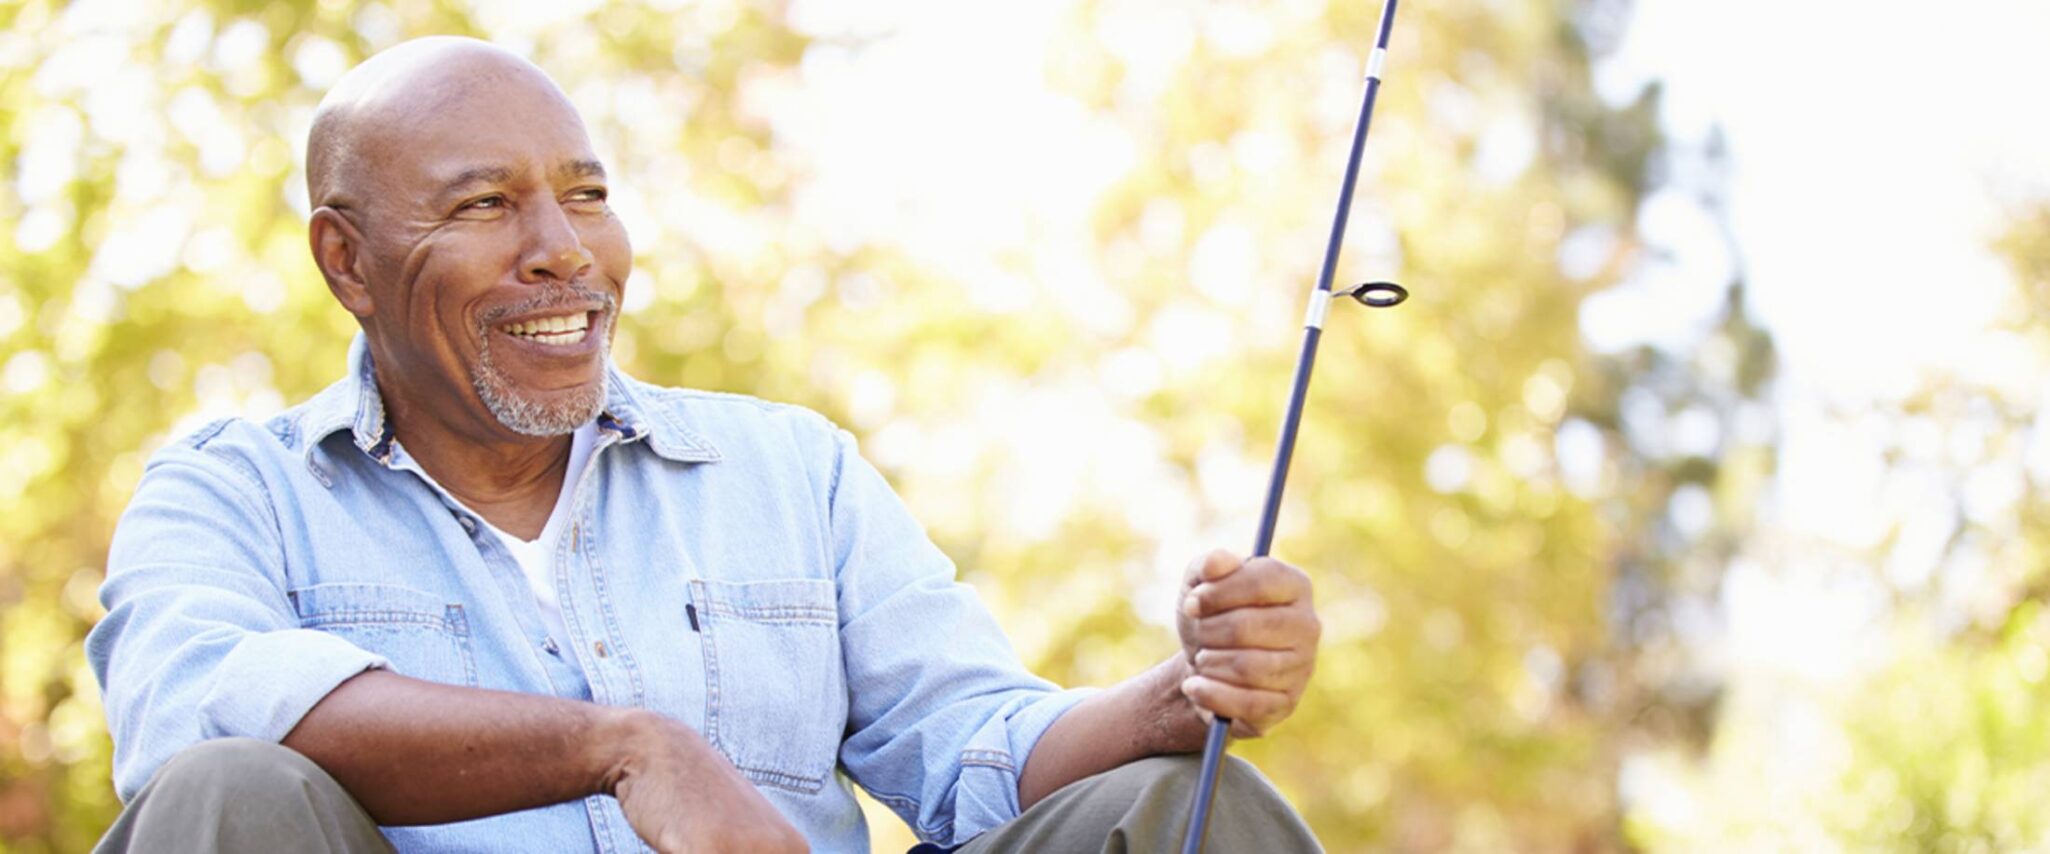 senior man fishing with adaptive fishing equipment in his retirement community